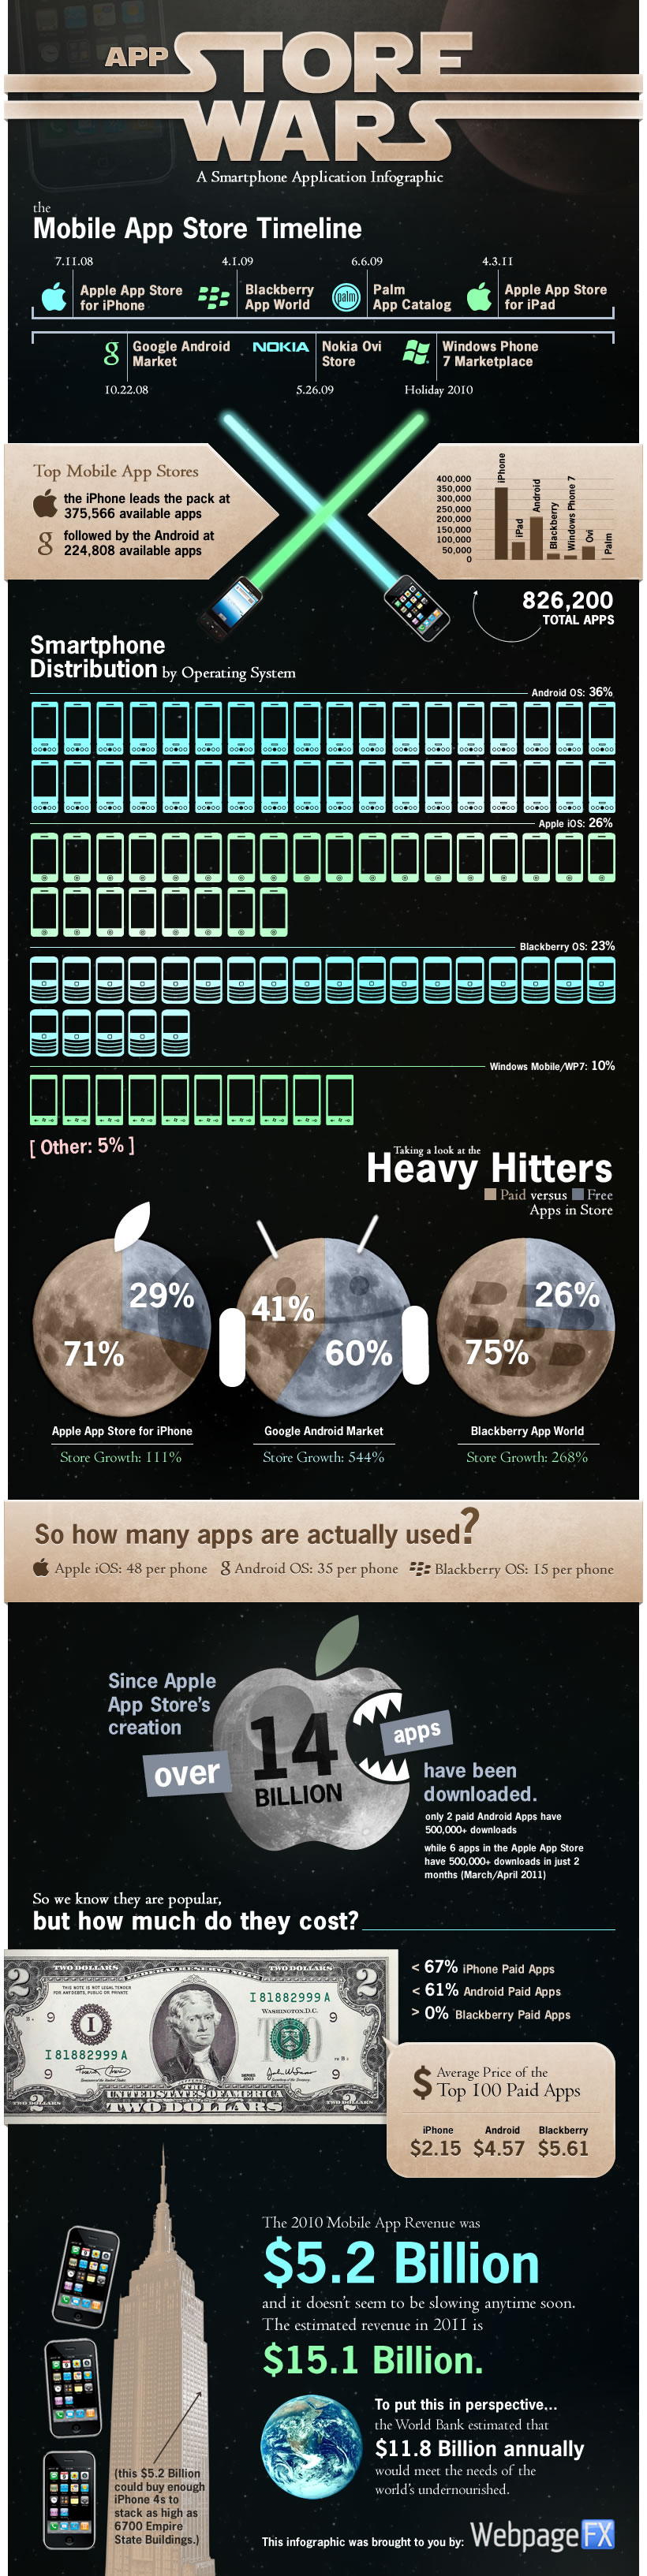 App Store Wars Timeline Infographic